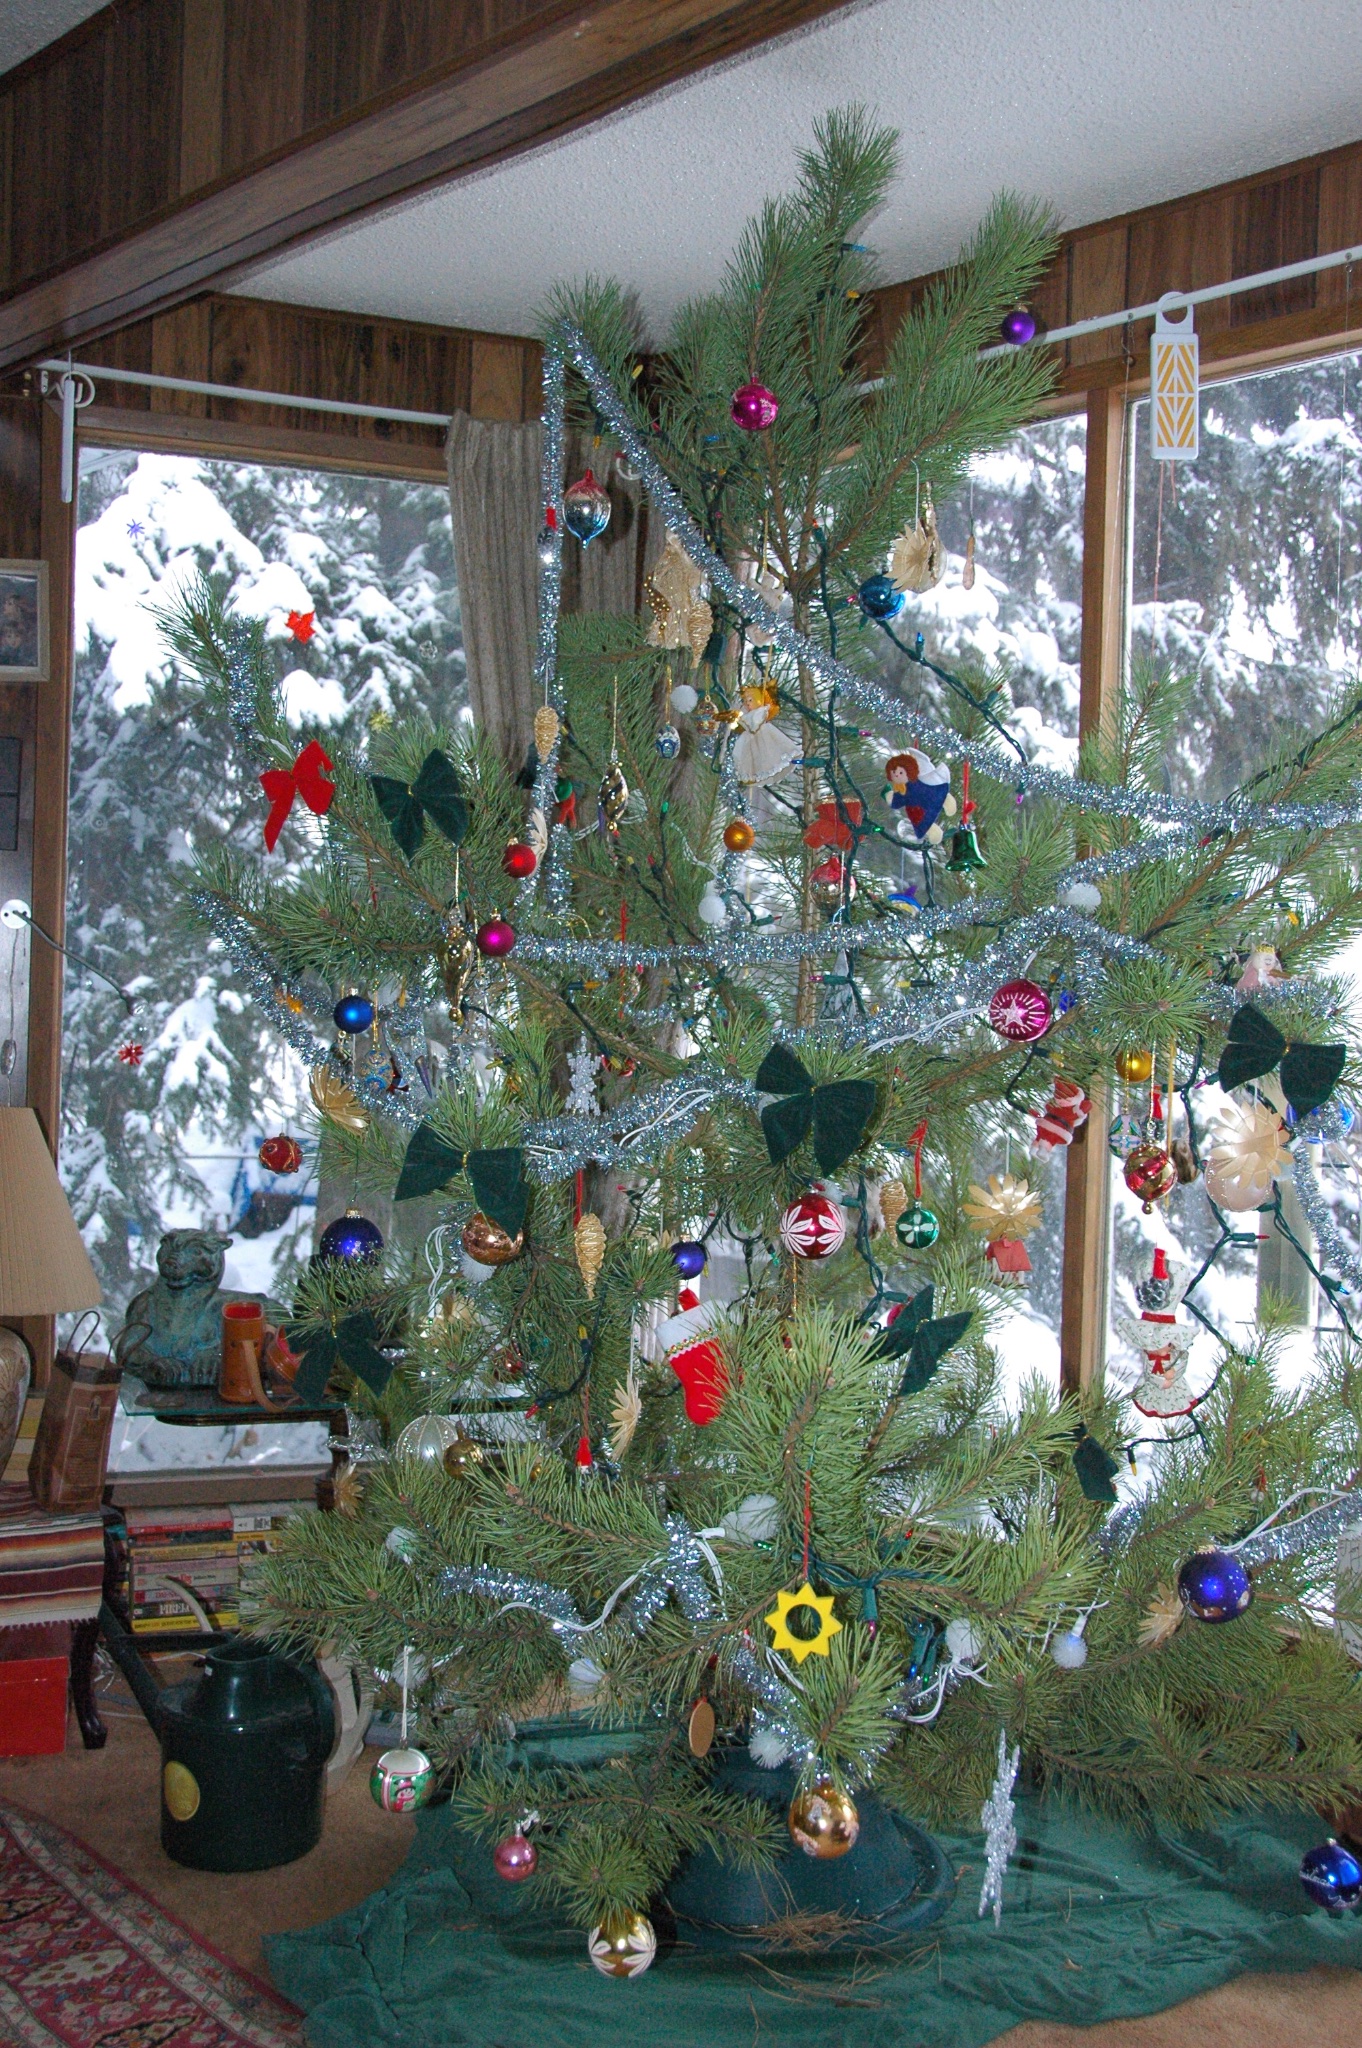 Edmonton family has 20,000 piece Lego Christmas tree